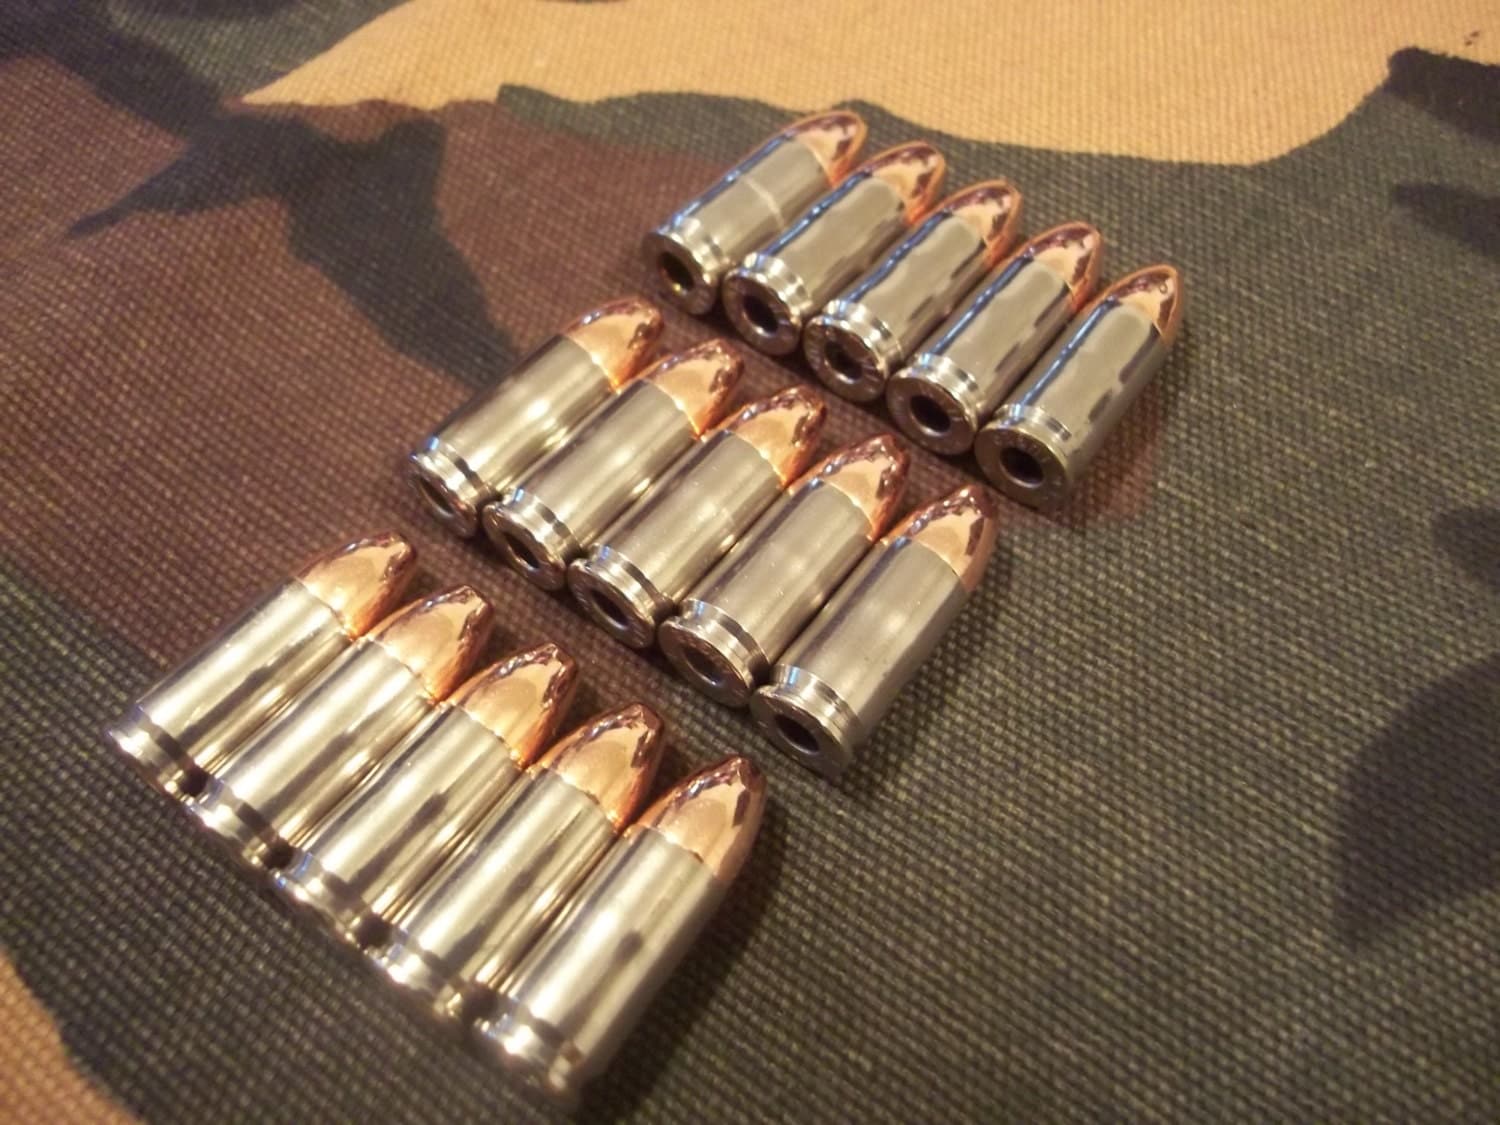 9mm bullets